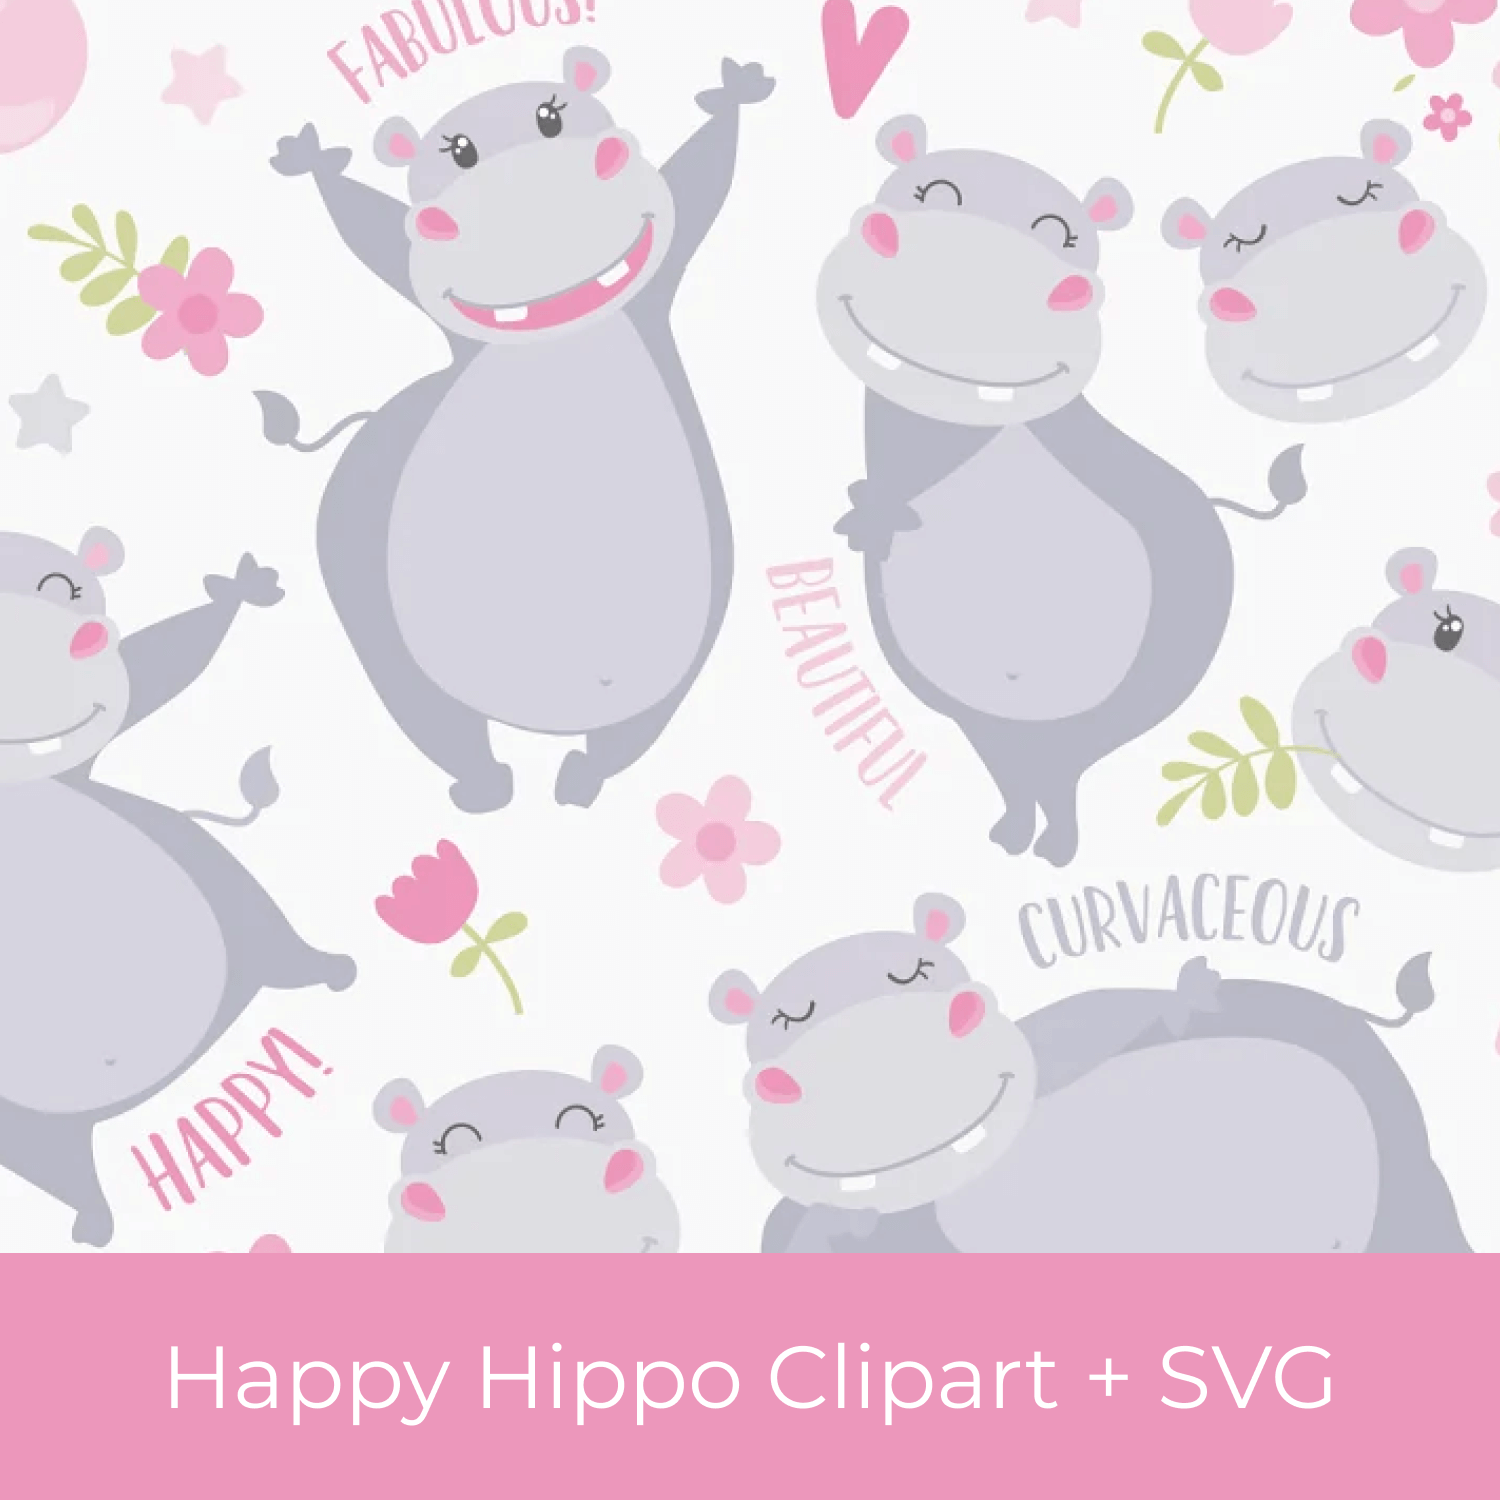 Happy hippo clipart.